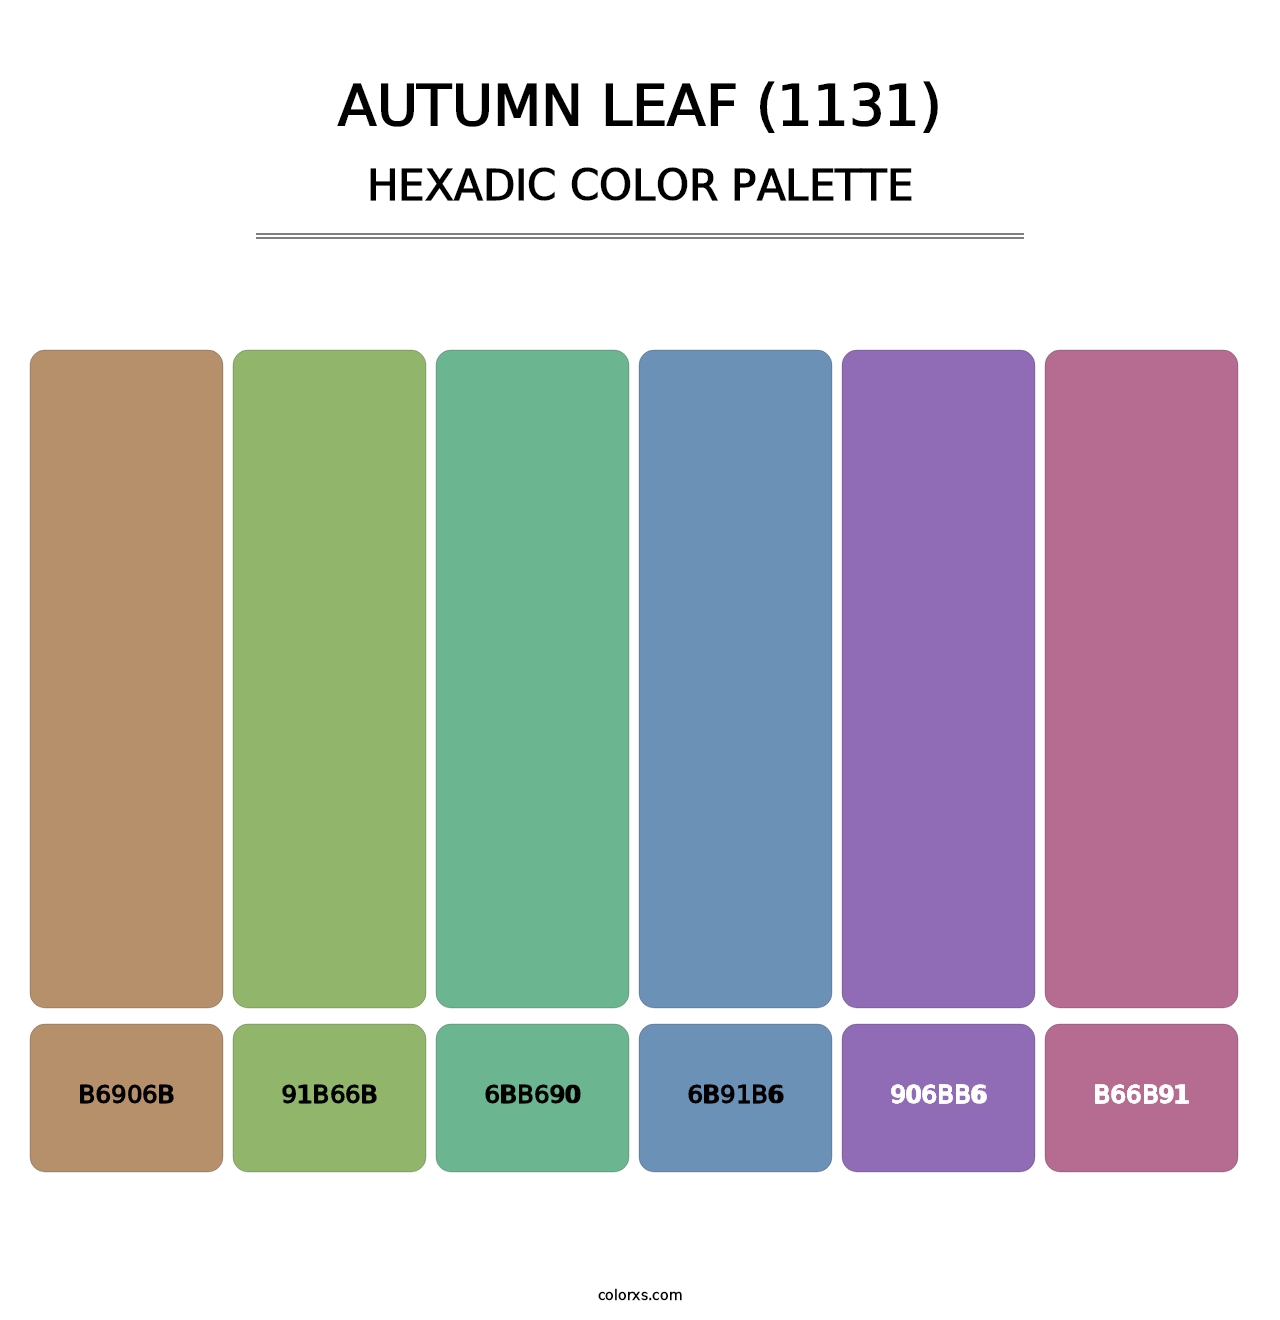 Autumn Leaf (1131) - Hexadic Color Palette